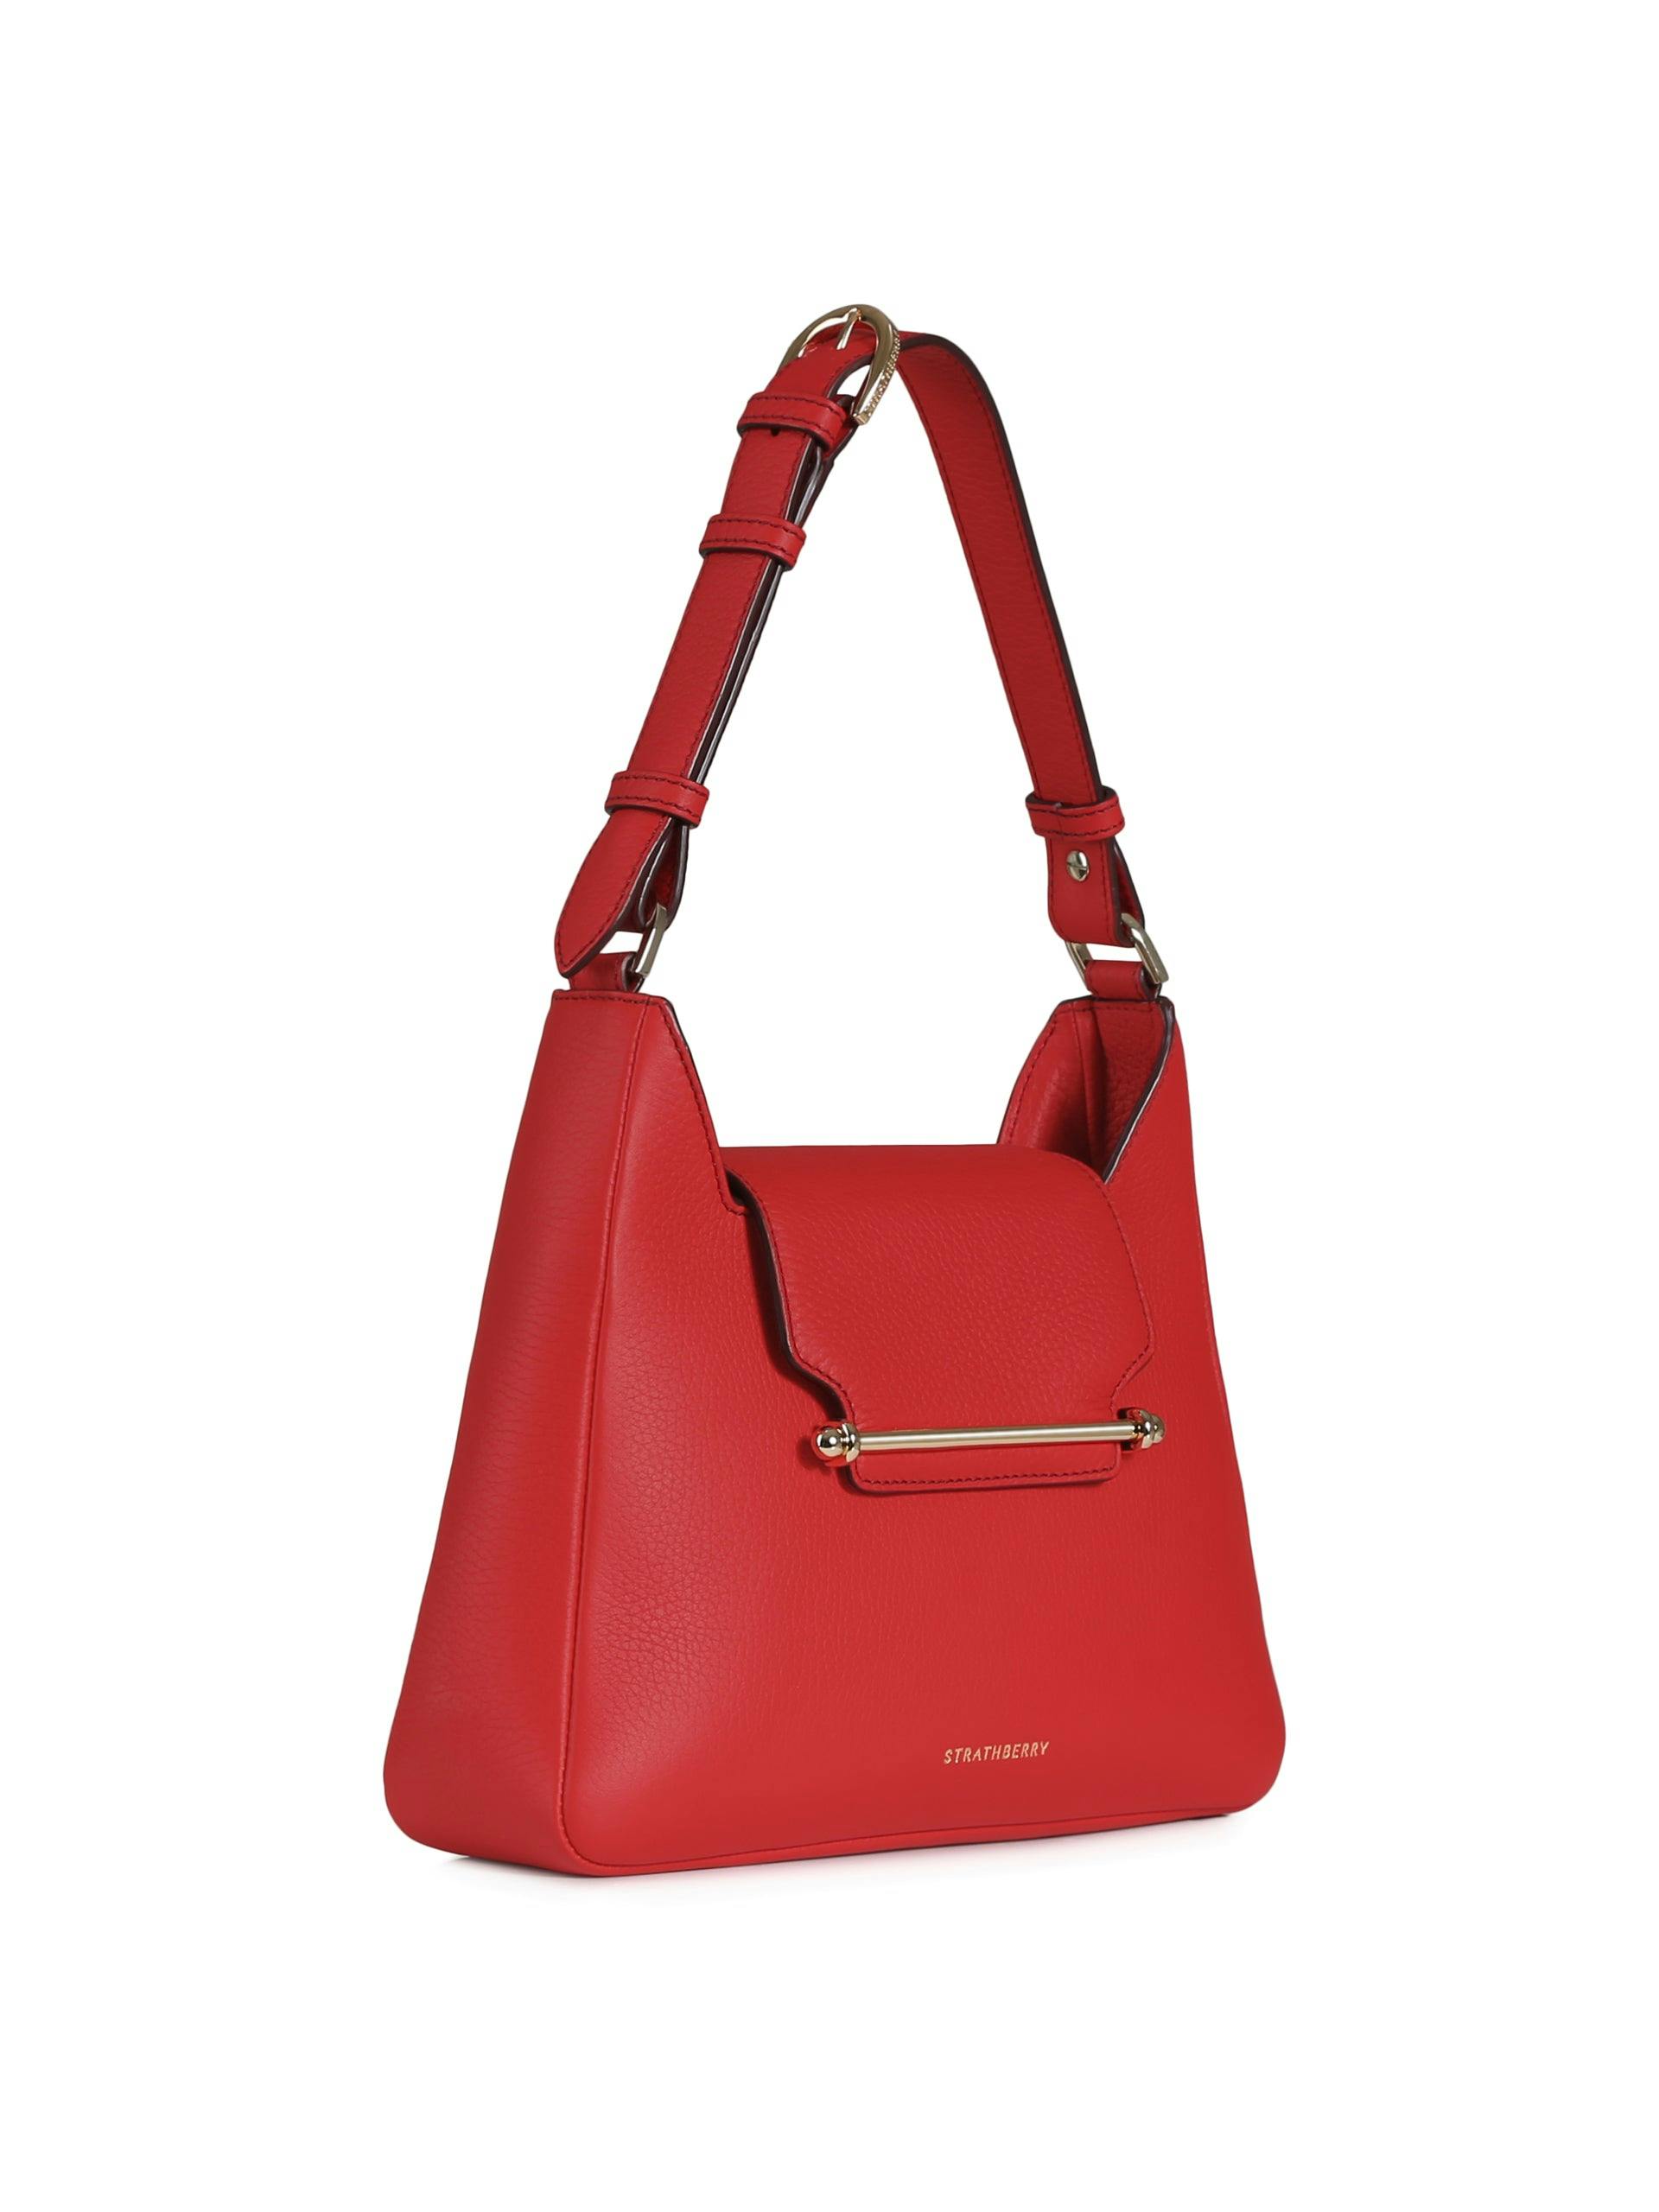 Multrees Hobo handbag in ruby red